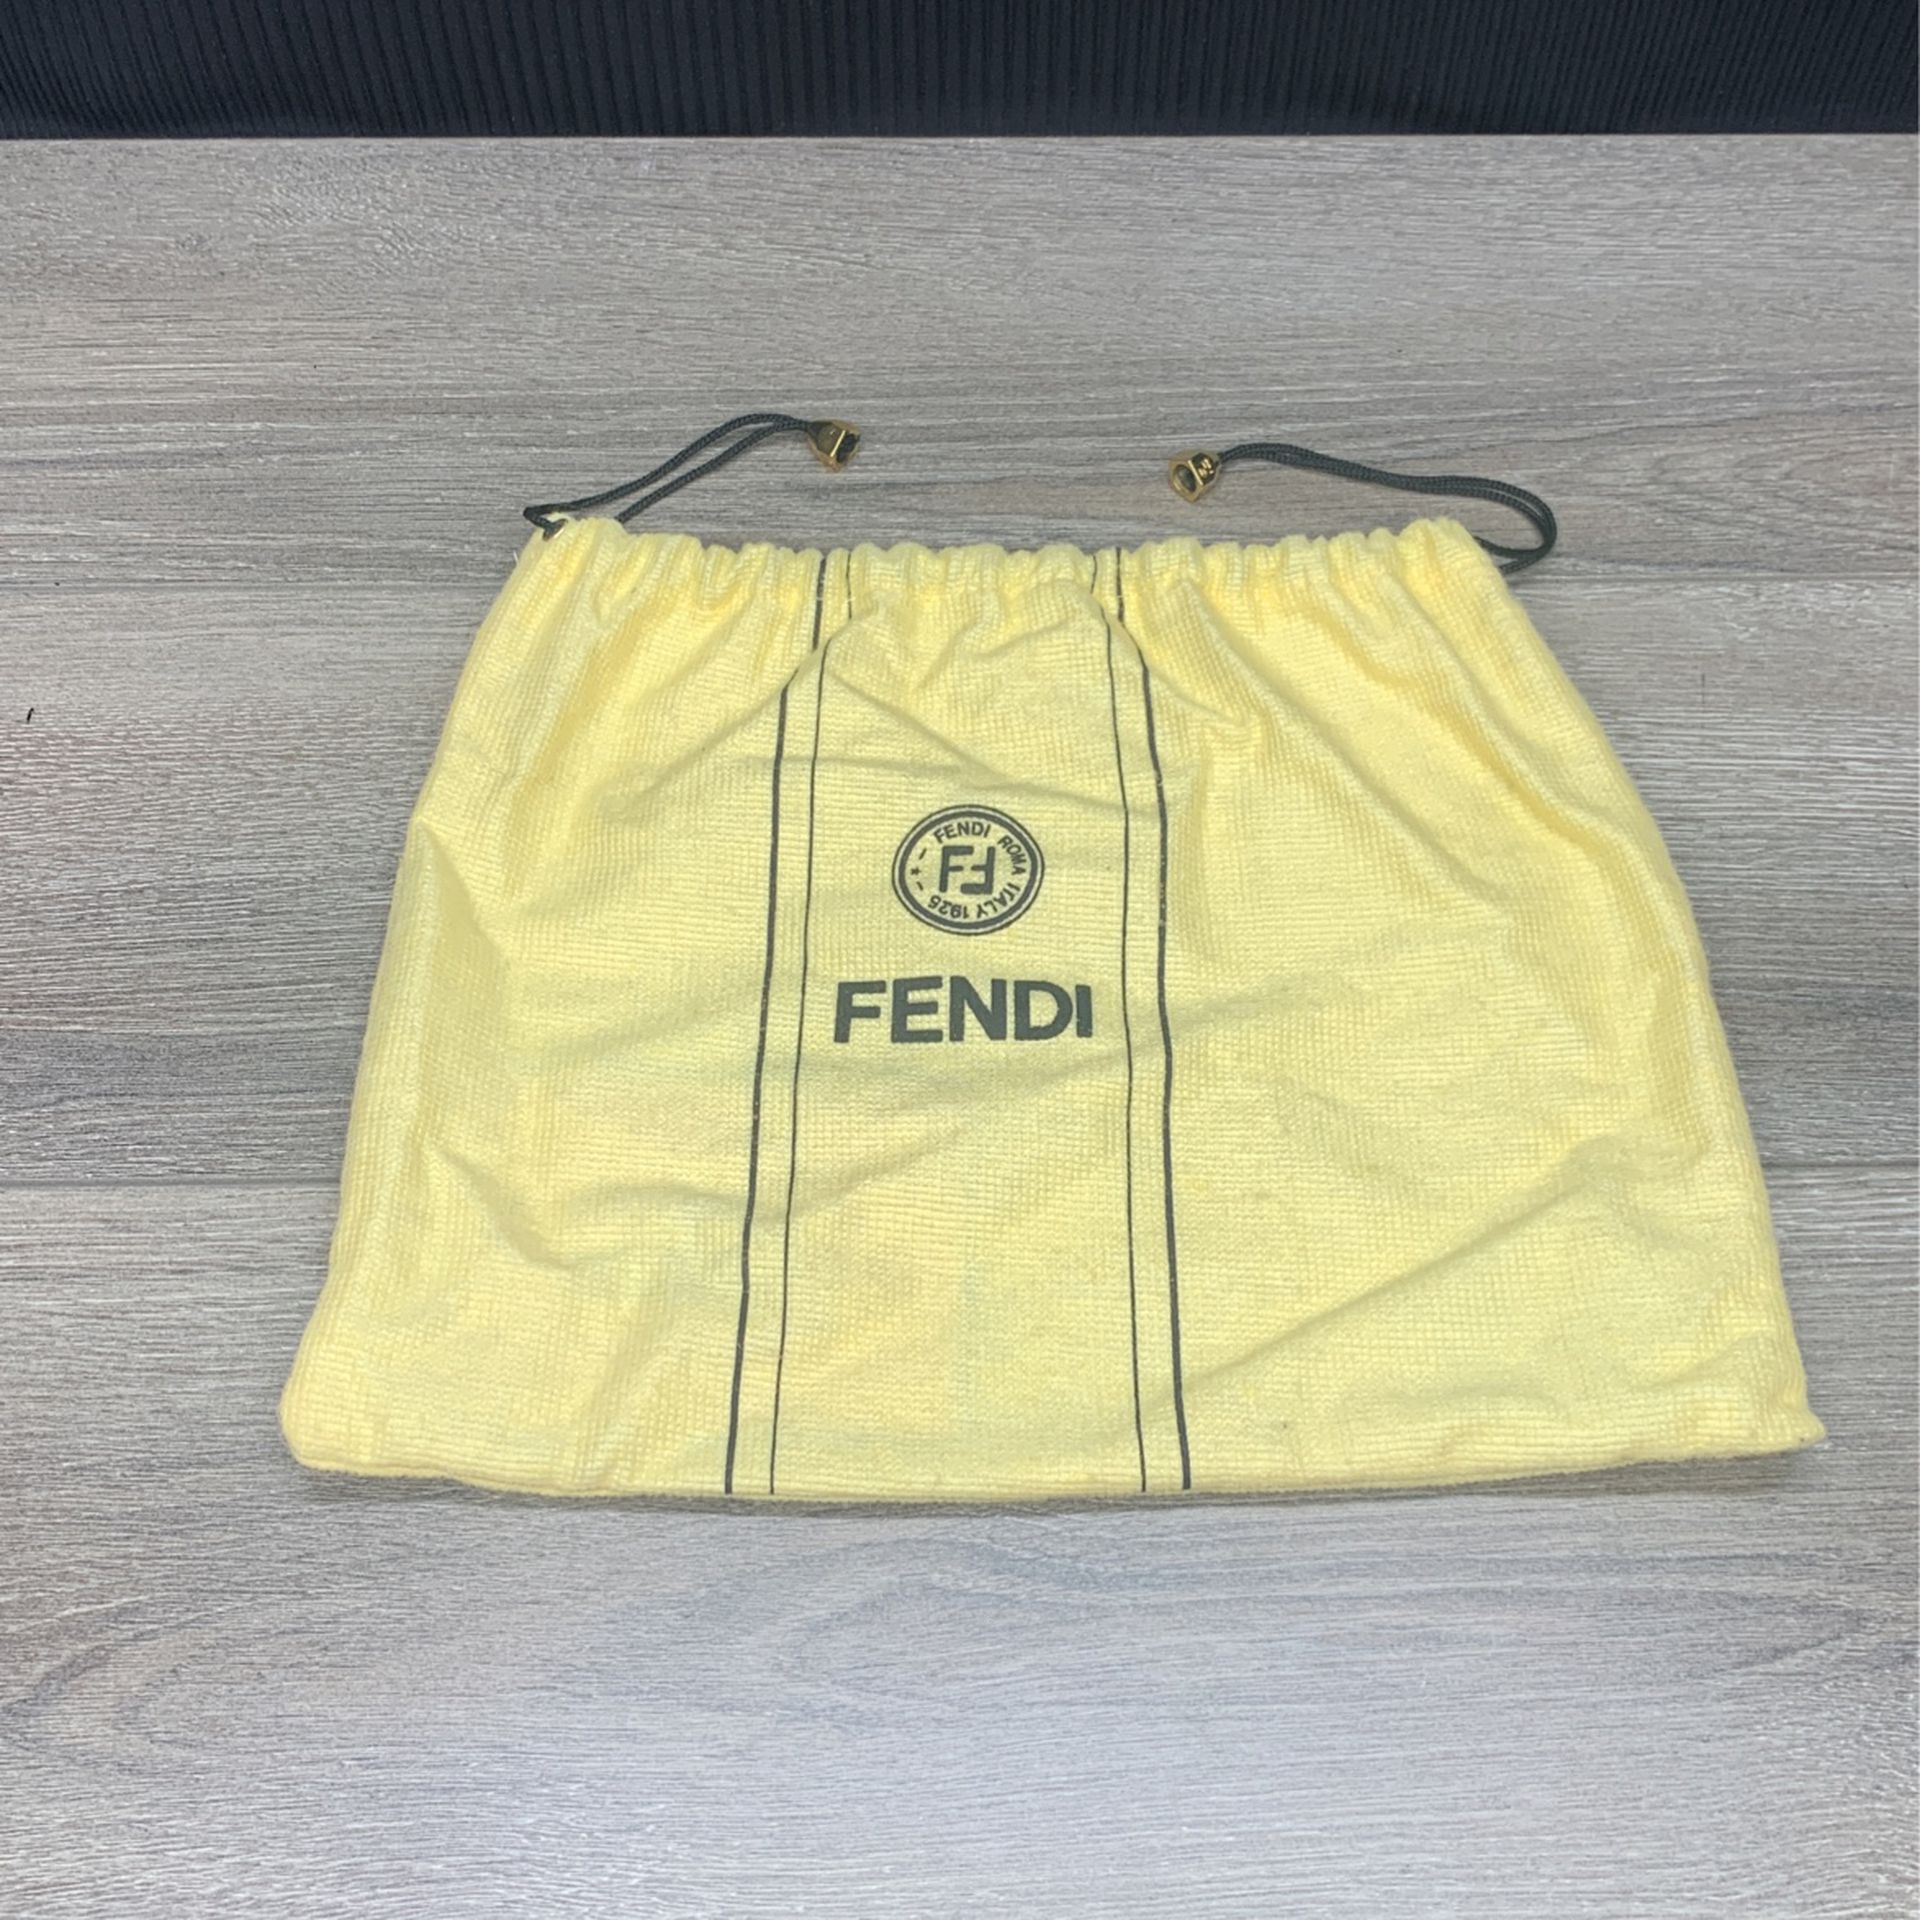 FENDI Logo Yellow Drawstring Dust Bag  Italy Authetic Purse Bag